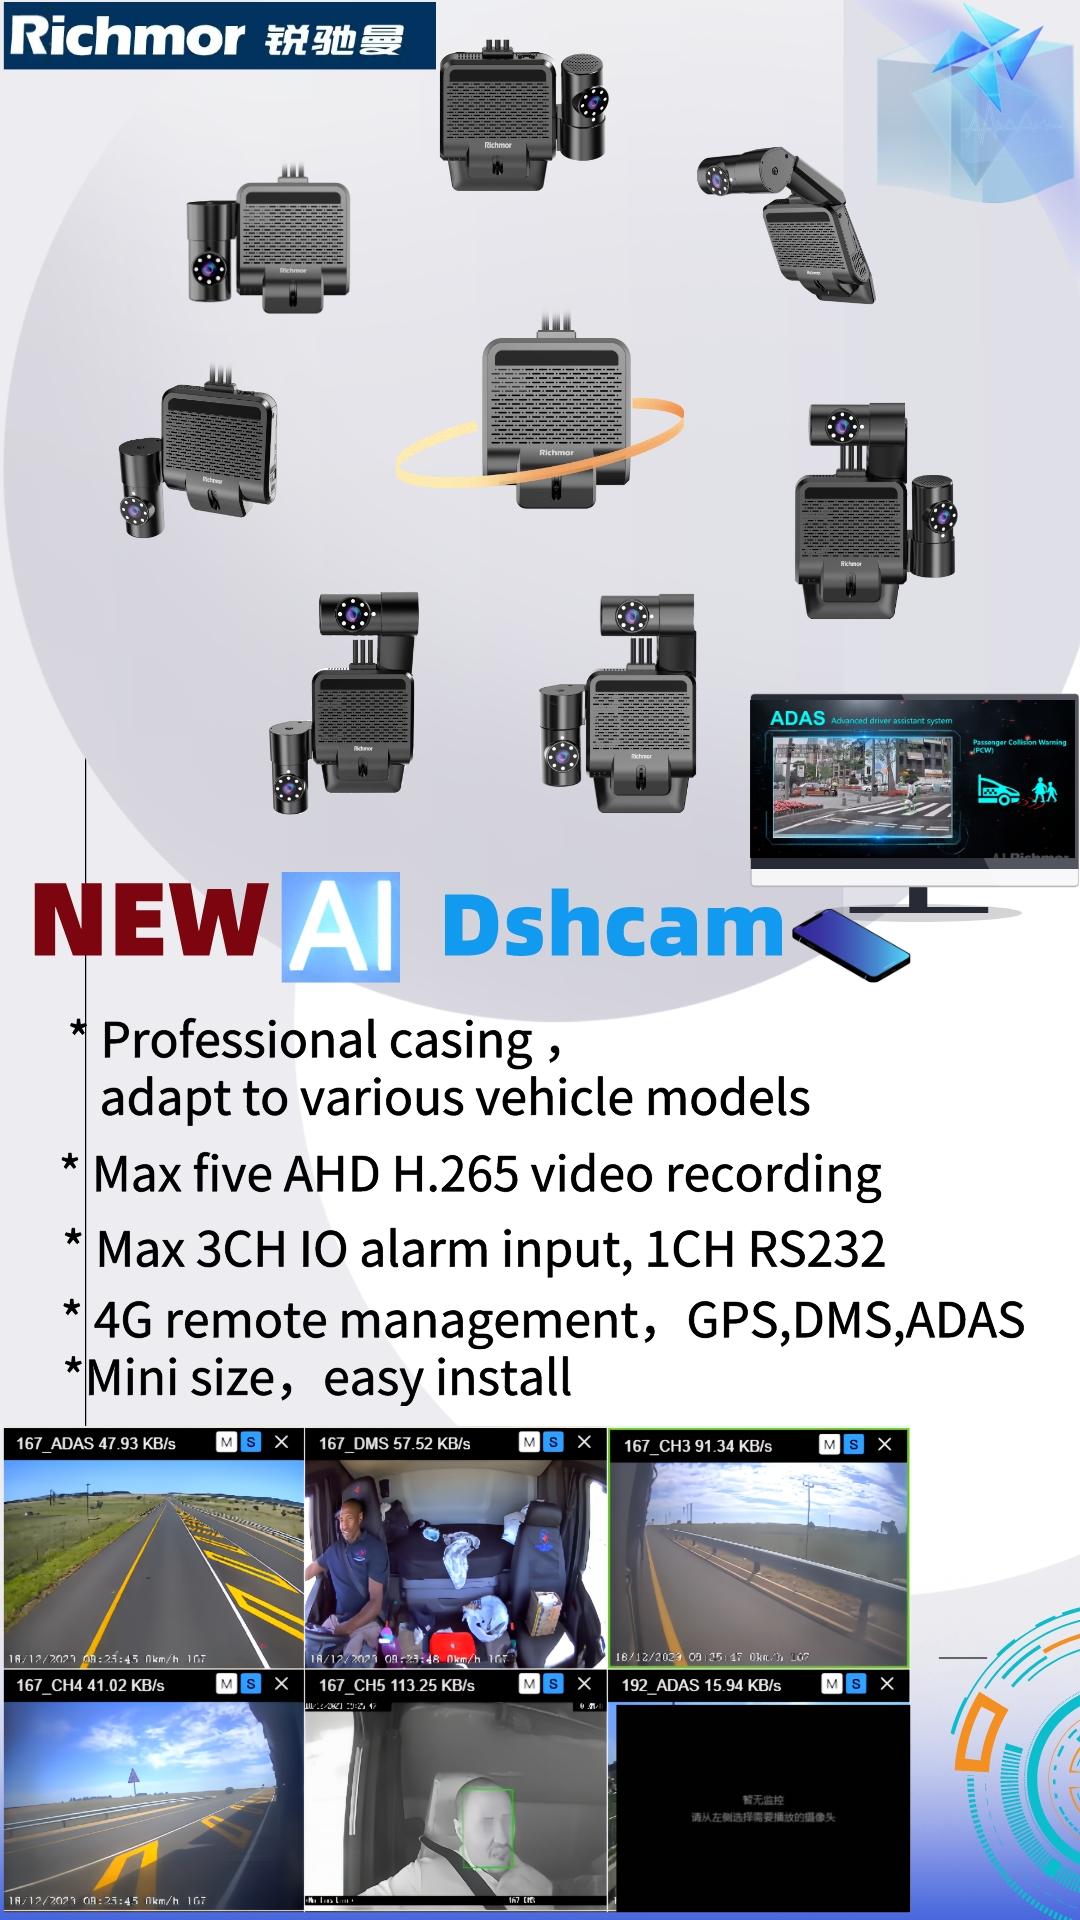 Richmor New Dashcam Transformers